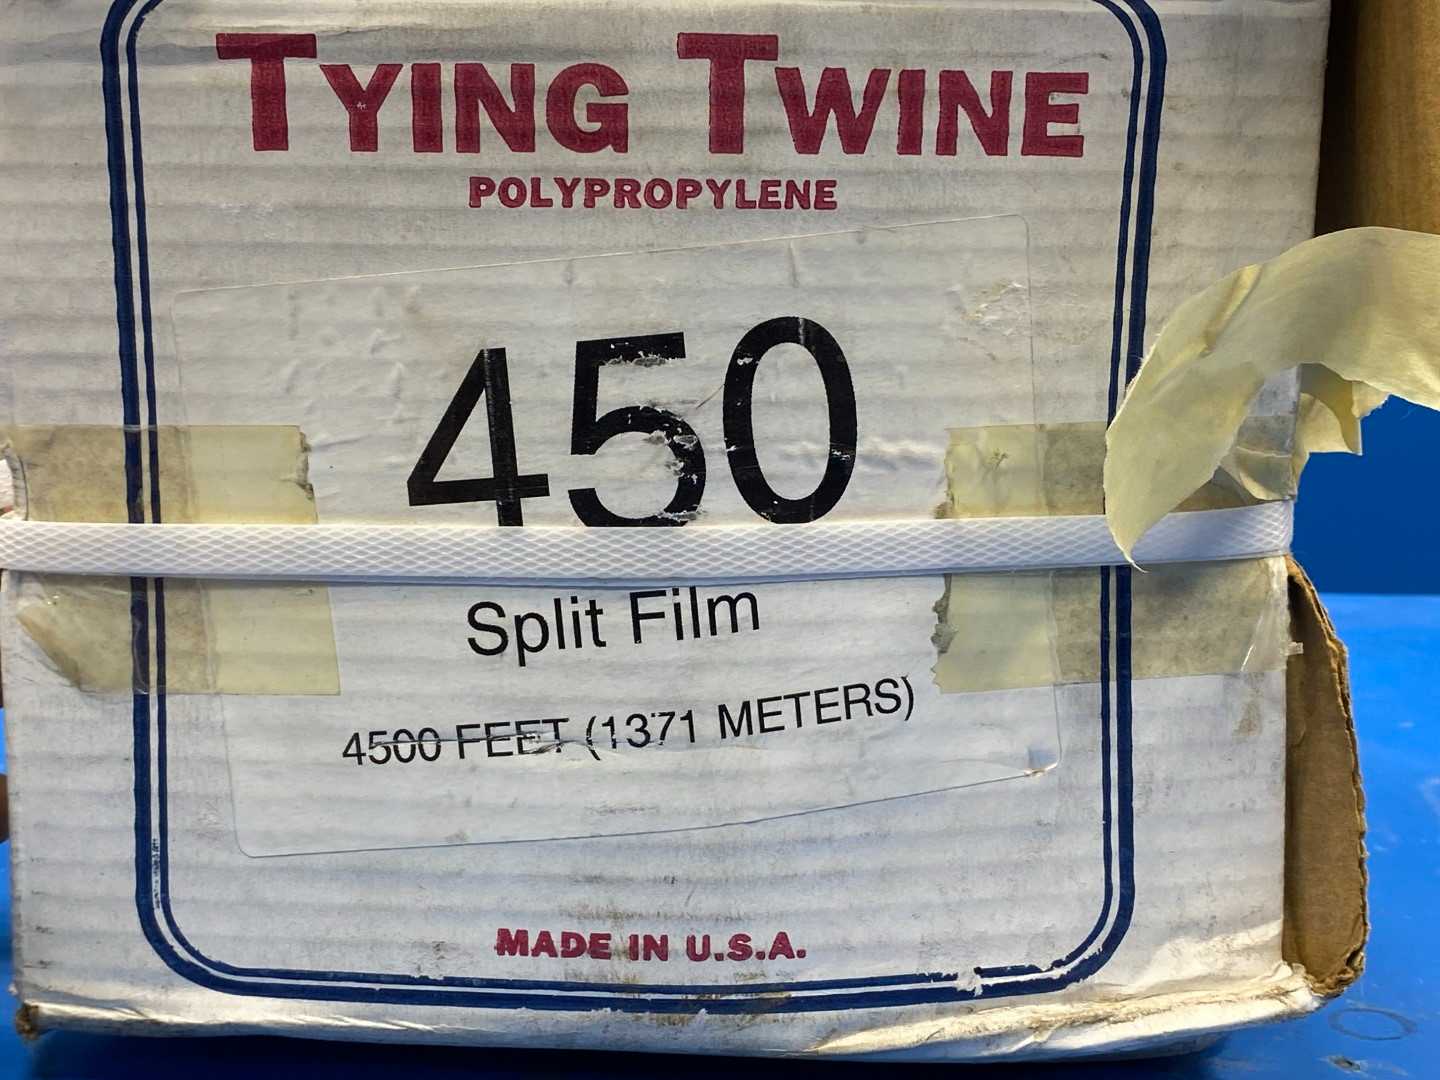 Tying Twine Polypropylene 450 Split Film 4500 Feet (1371Meters)